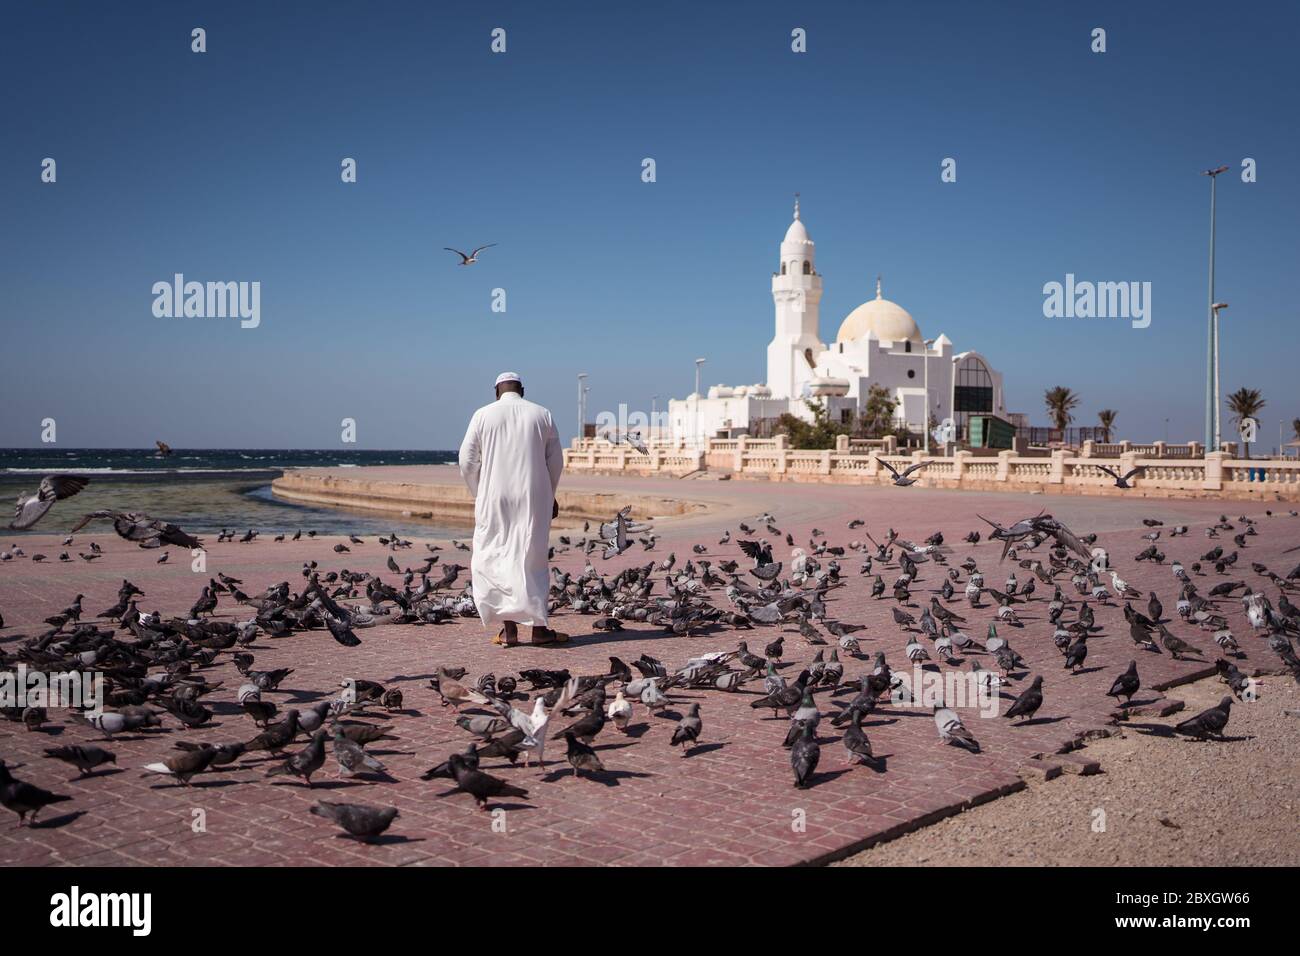 Jeddah / Saudi Arabia - January 20, 2020: Muslim believers feeding pigeons near beautiful Mosque near the sea Stock Photo